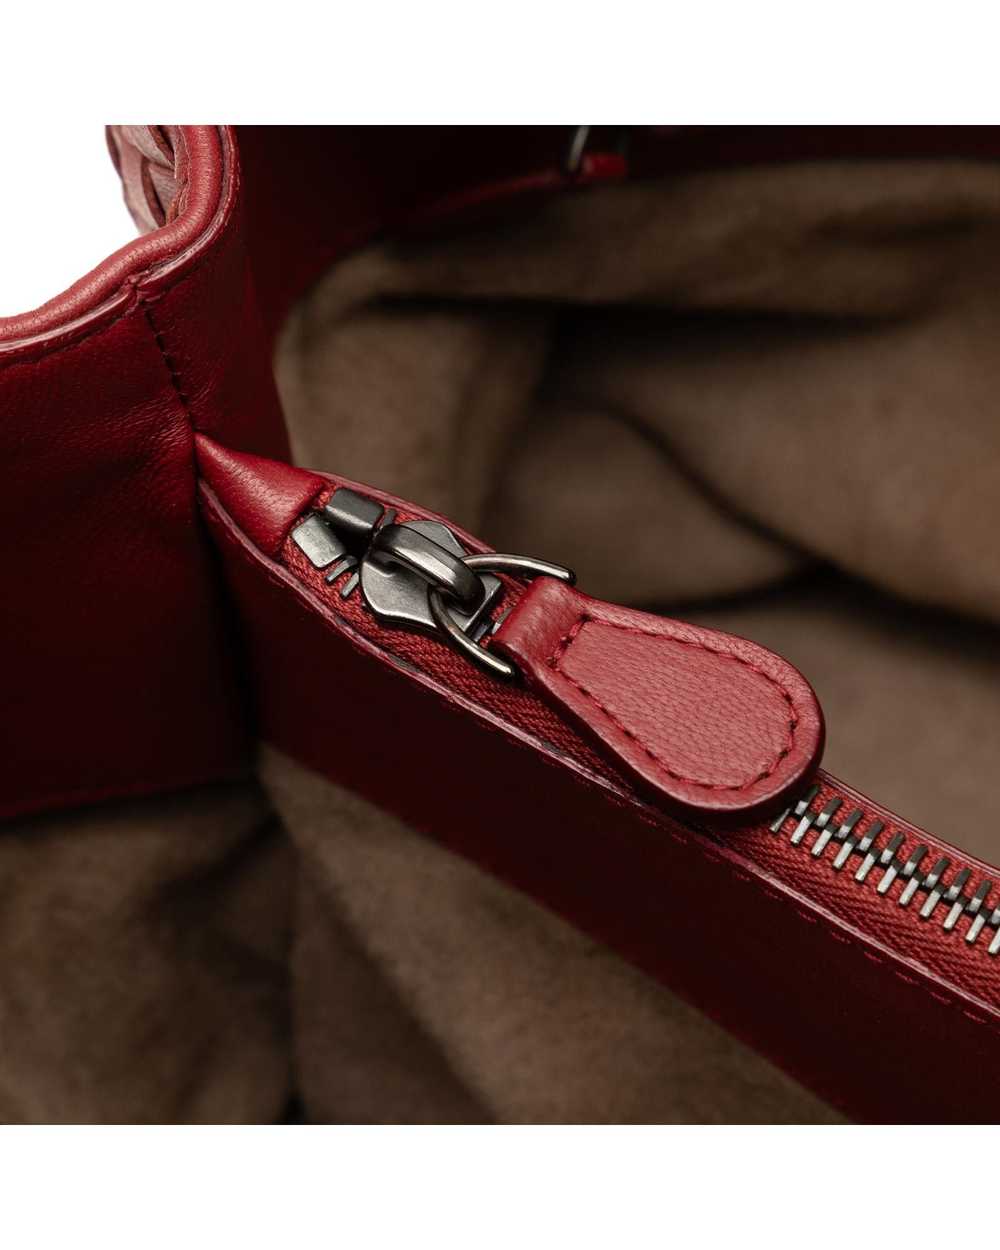 Bottega Veneta Woven Leather Double Chain Tote Bag - image 9